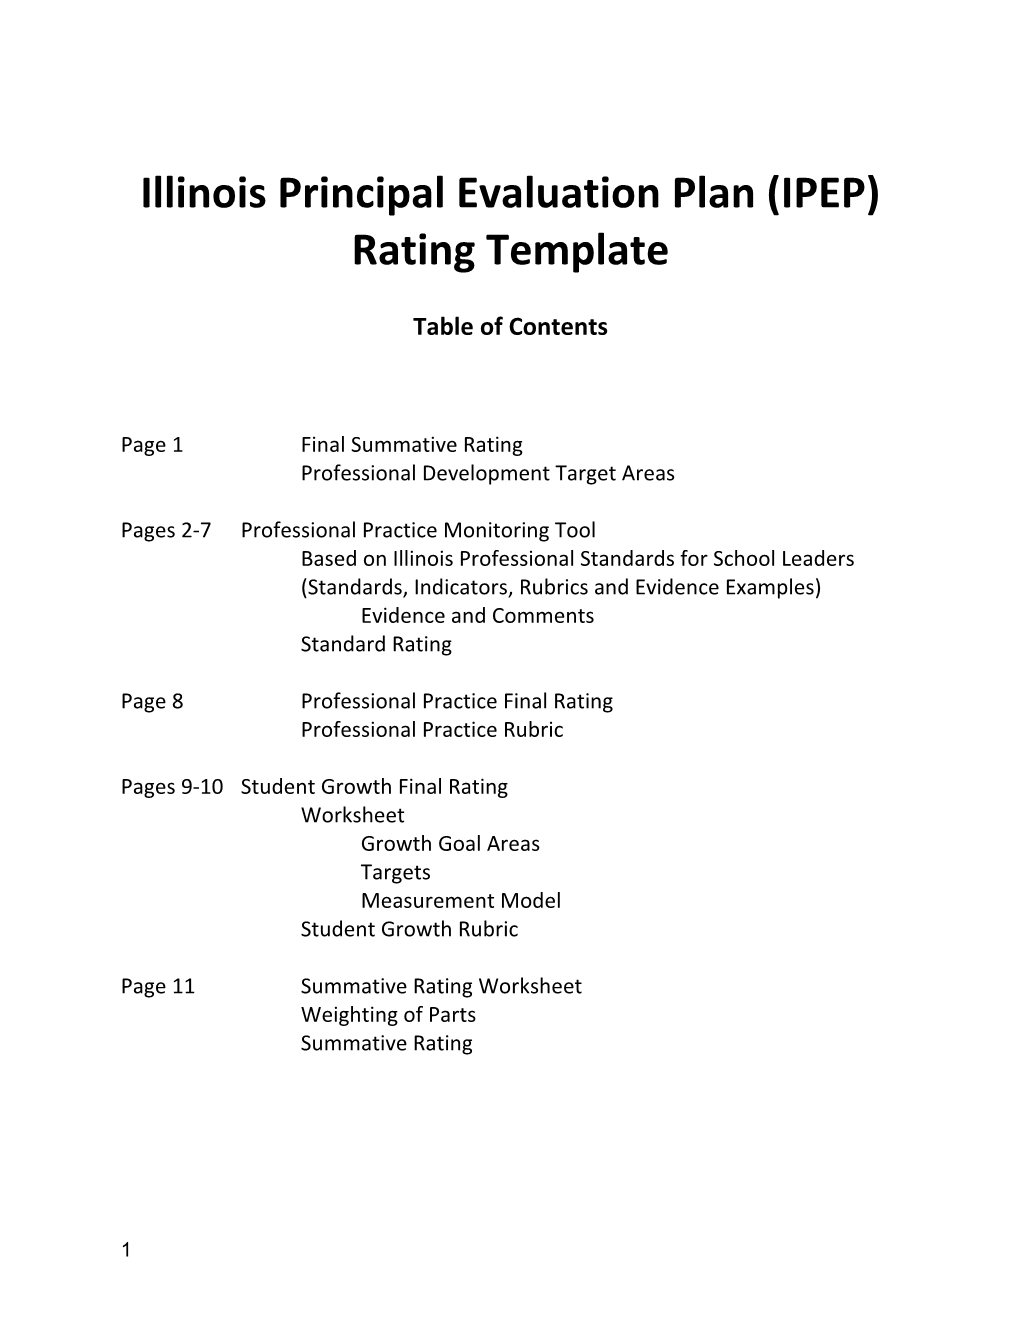 Illinois Principal Evaluation Plan (IPEP) Rating Template